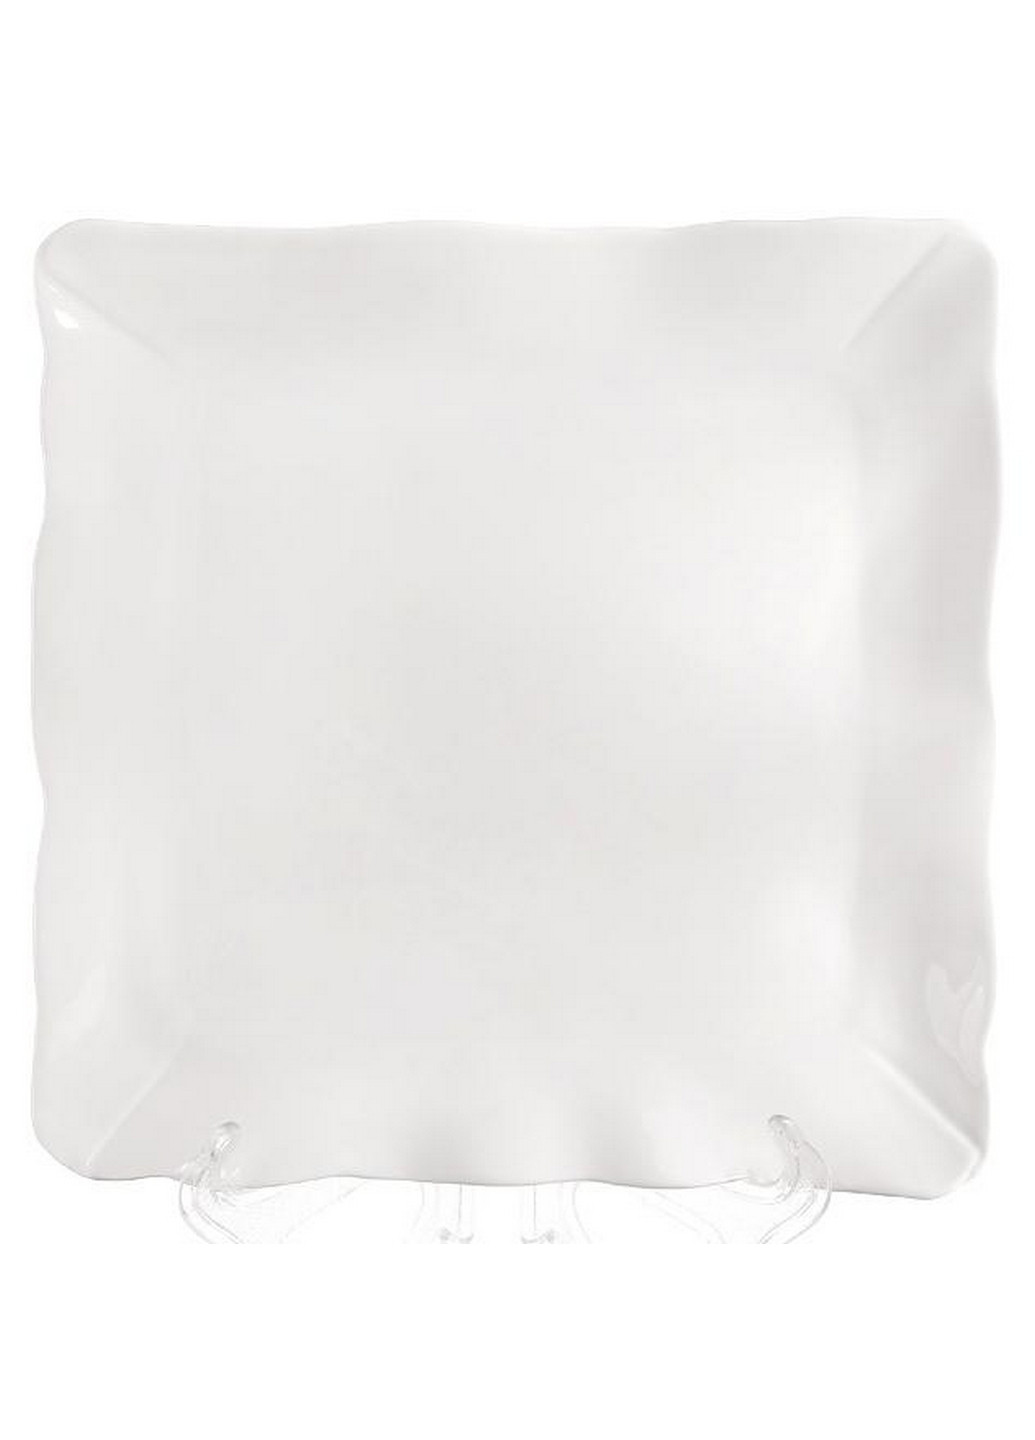 Тарелки квадратные White City Волна, набор 2 фарфоровые тарелки 25,5х25,5х2,5 см Bona (267148950)